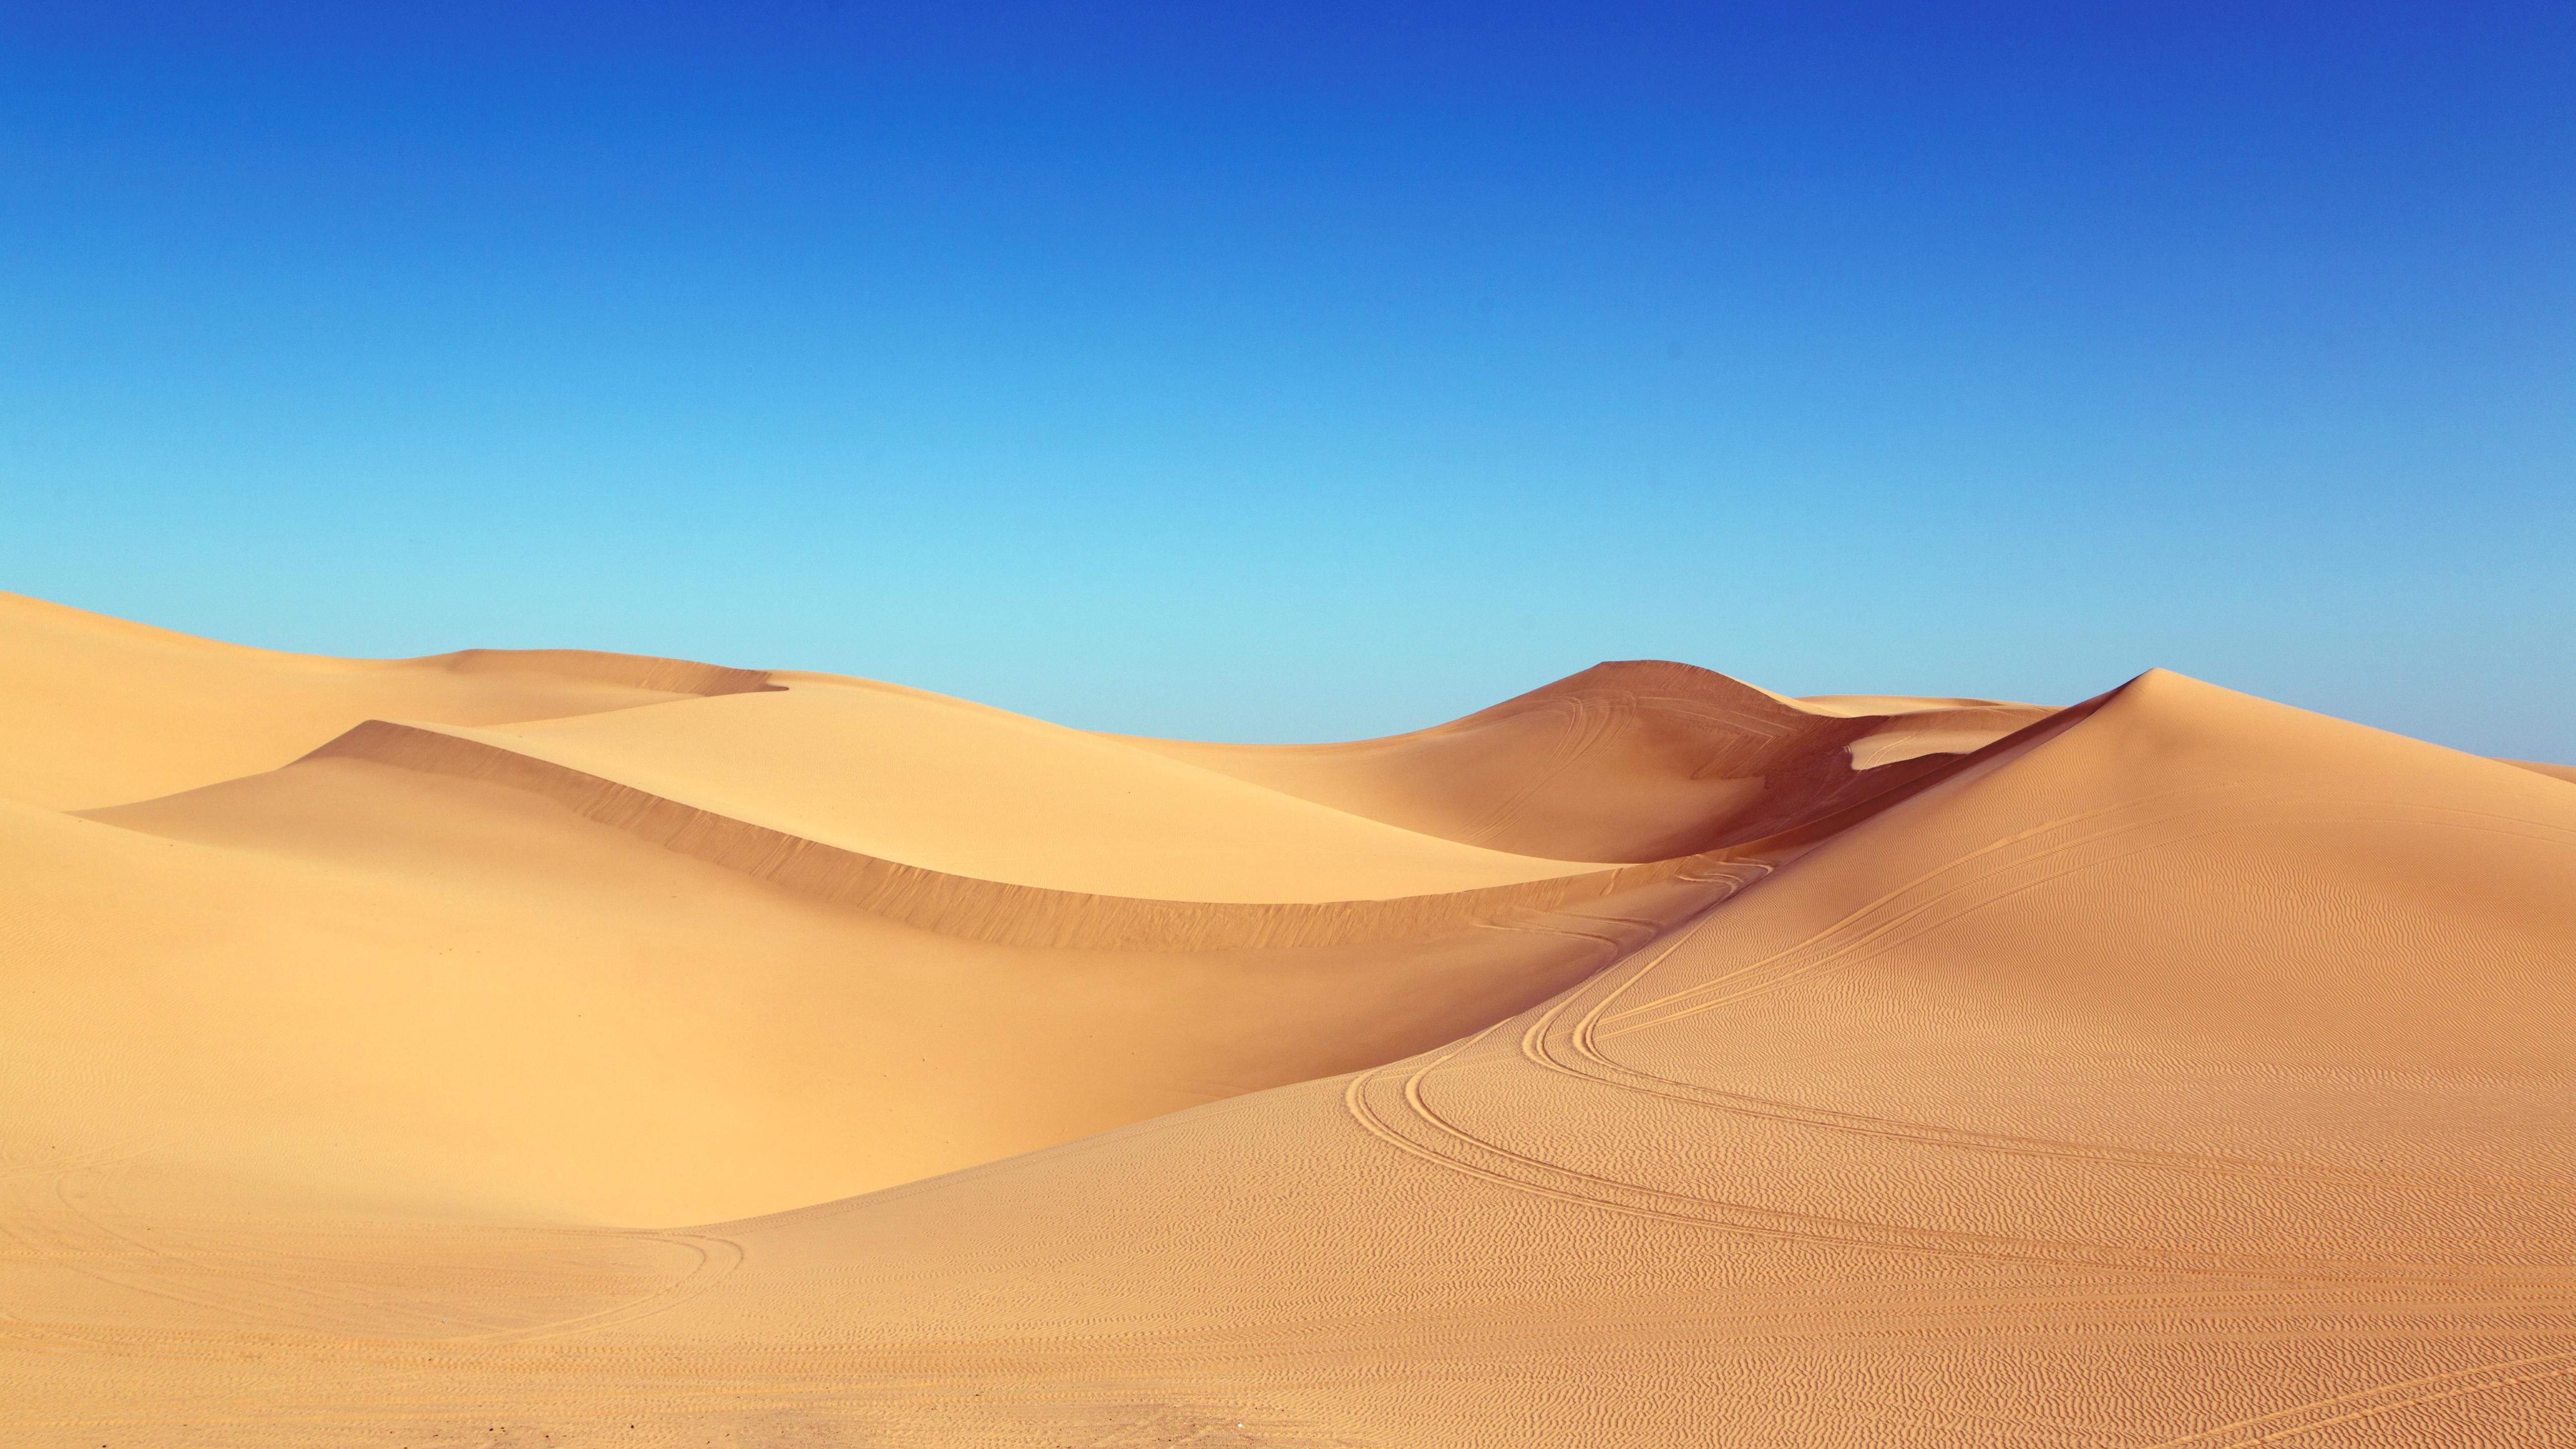 Blue sky and desert dunes wallpaper 5120x2880